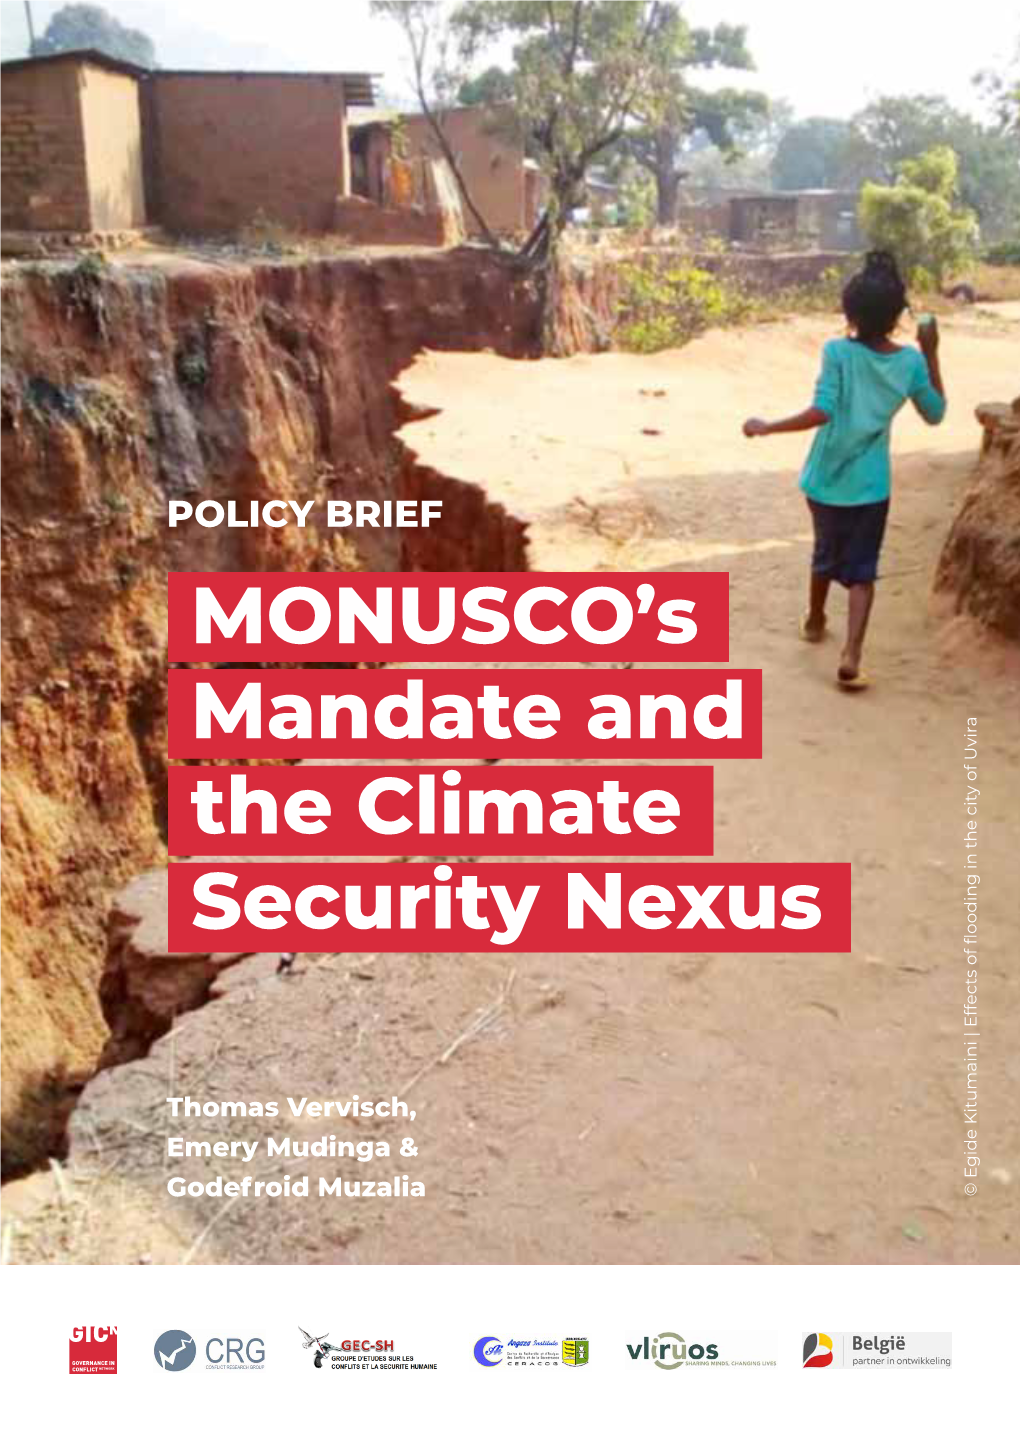 MONUSCO's Mandate and the Climate Security Nexus